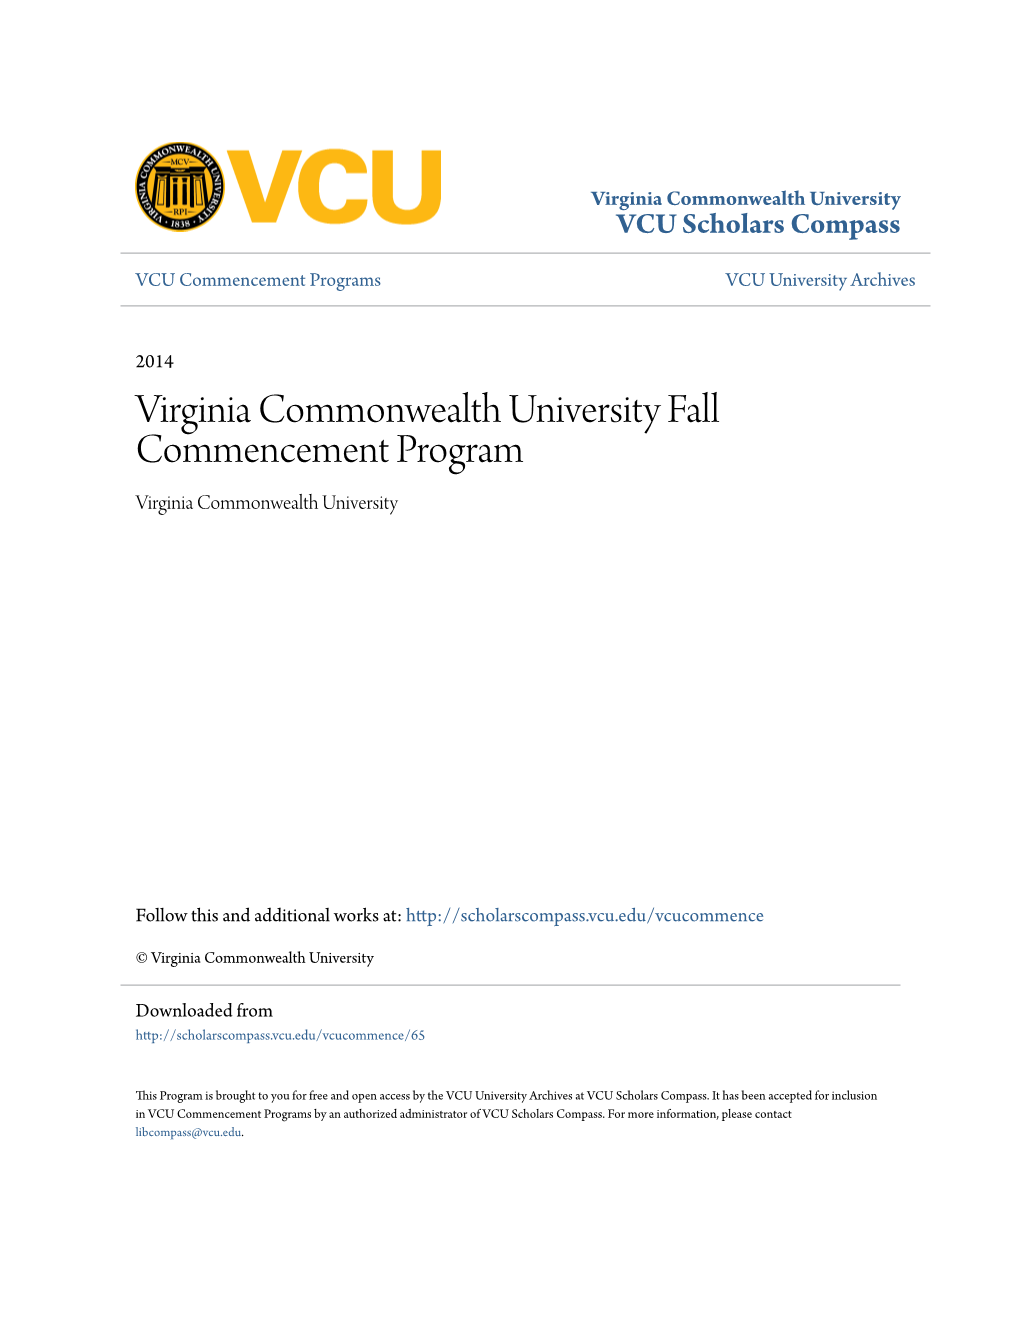 Virginia Commonwealth University Fall Commencement Program Virginia Commonwealth University